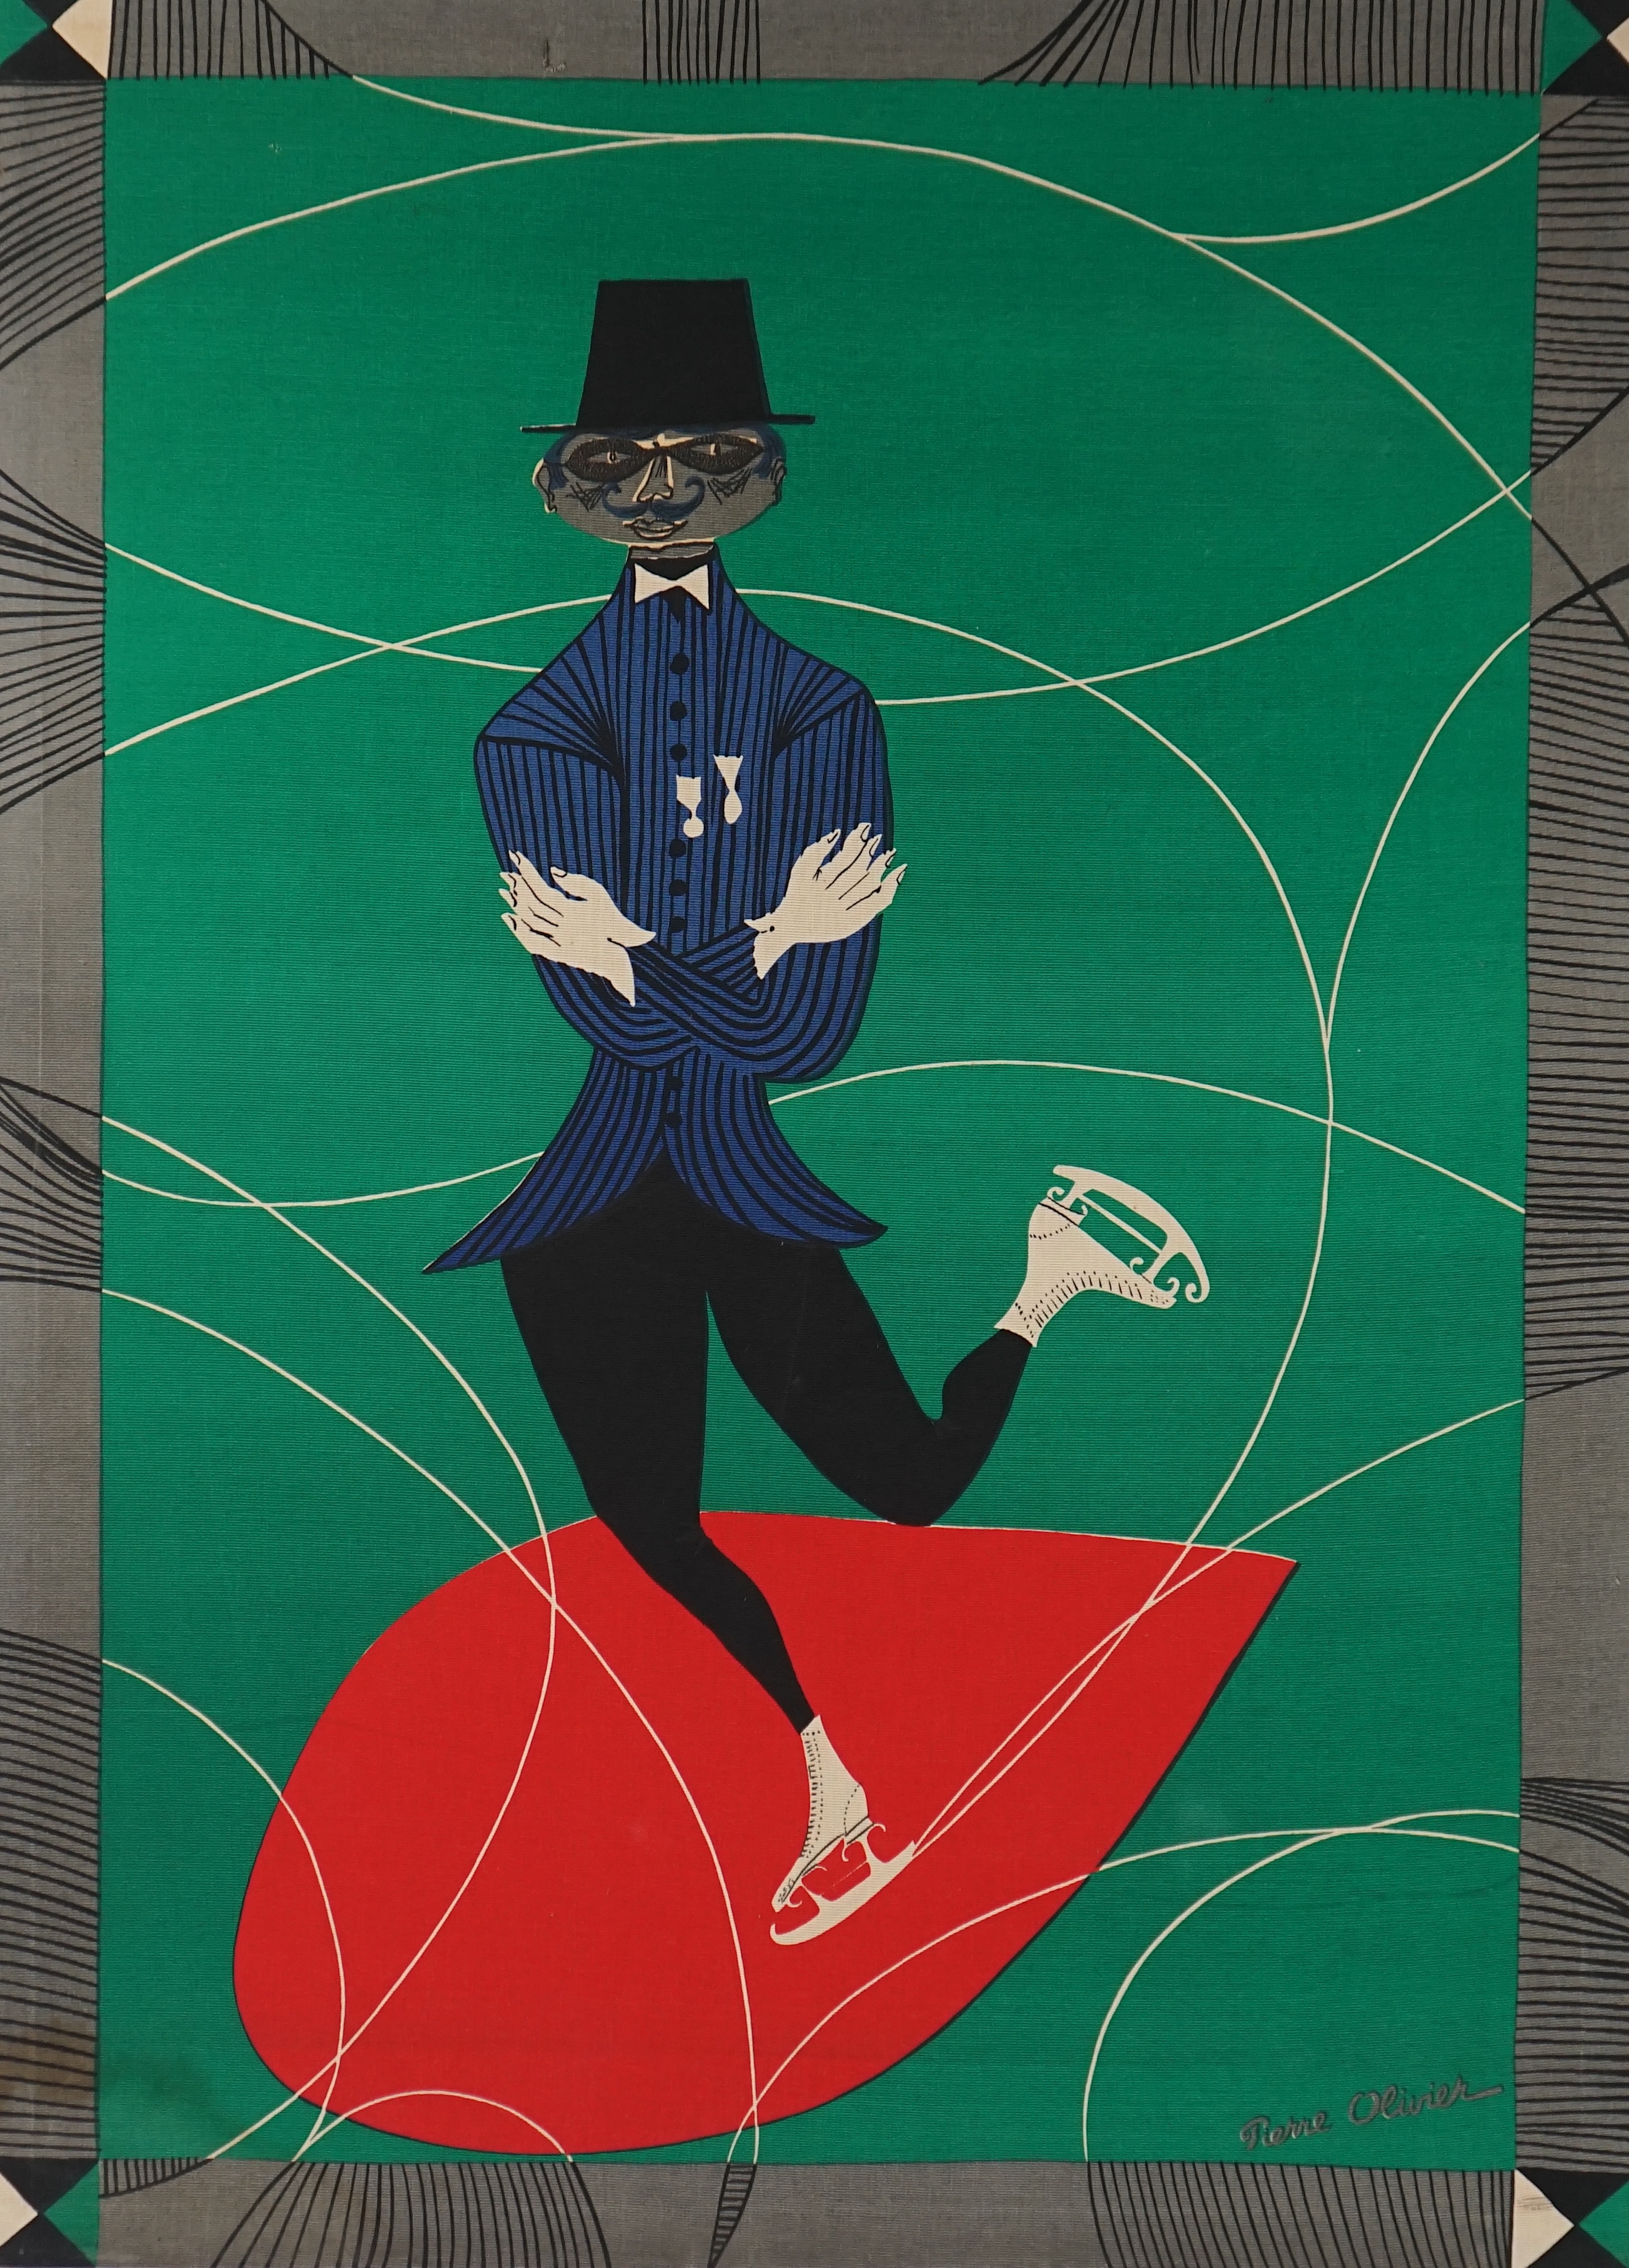 Pierre Olivier, Dandy skater, machined tapestry, 181 x 131cm